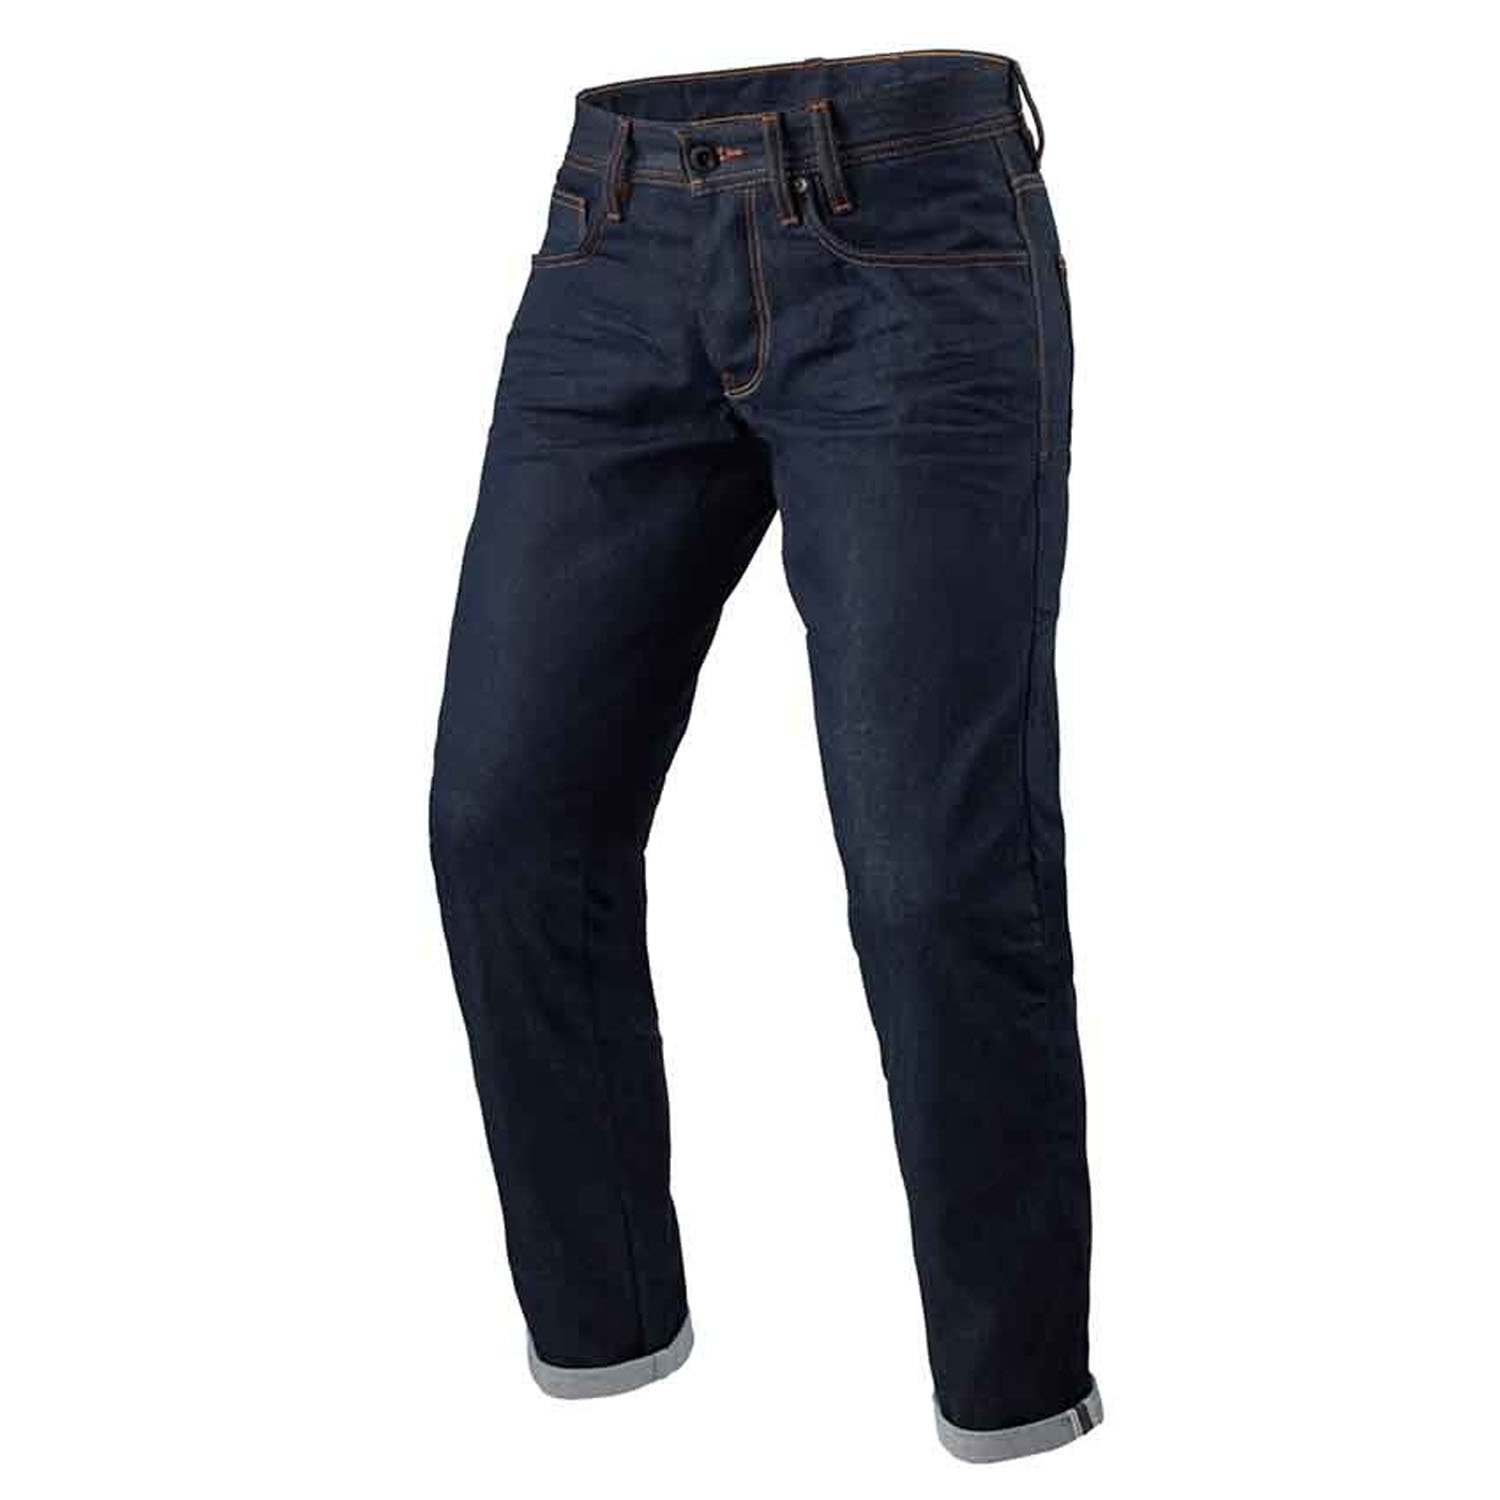 Image of REV'IT! Jeans Lewis Selvedge TF Dark Blue L36 Motorcycle Pants Größe L36/W30